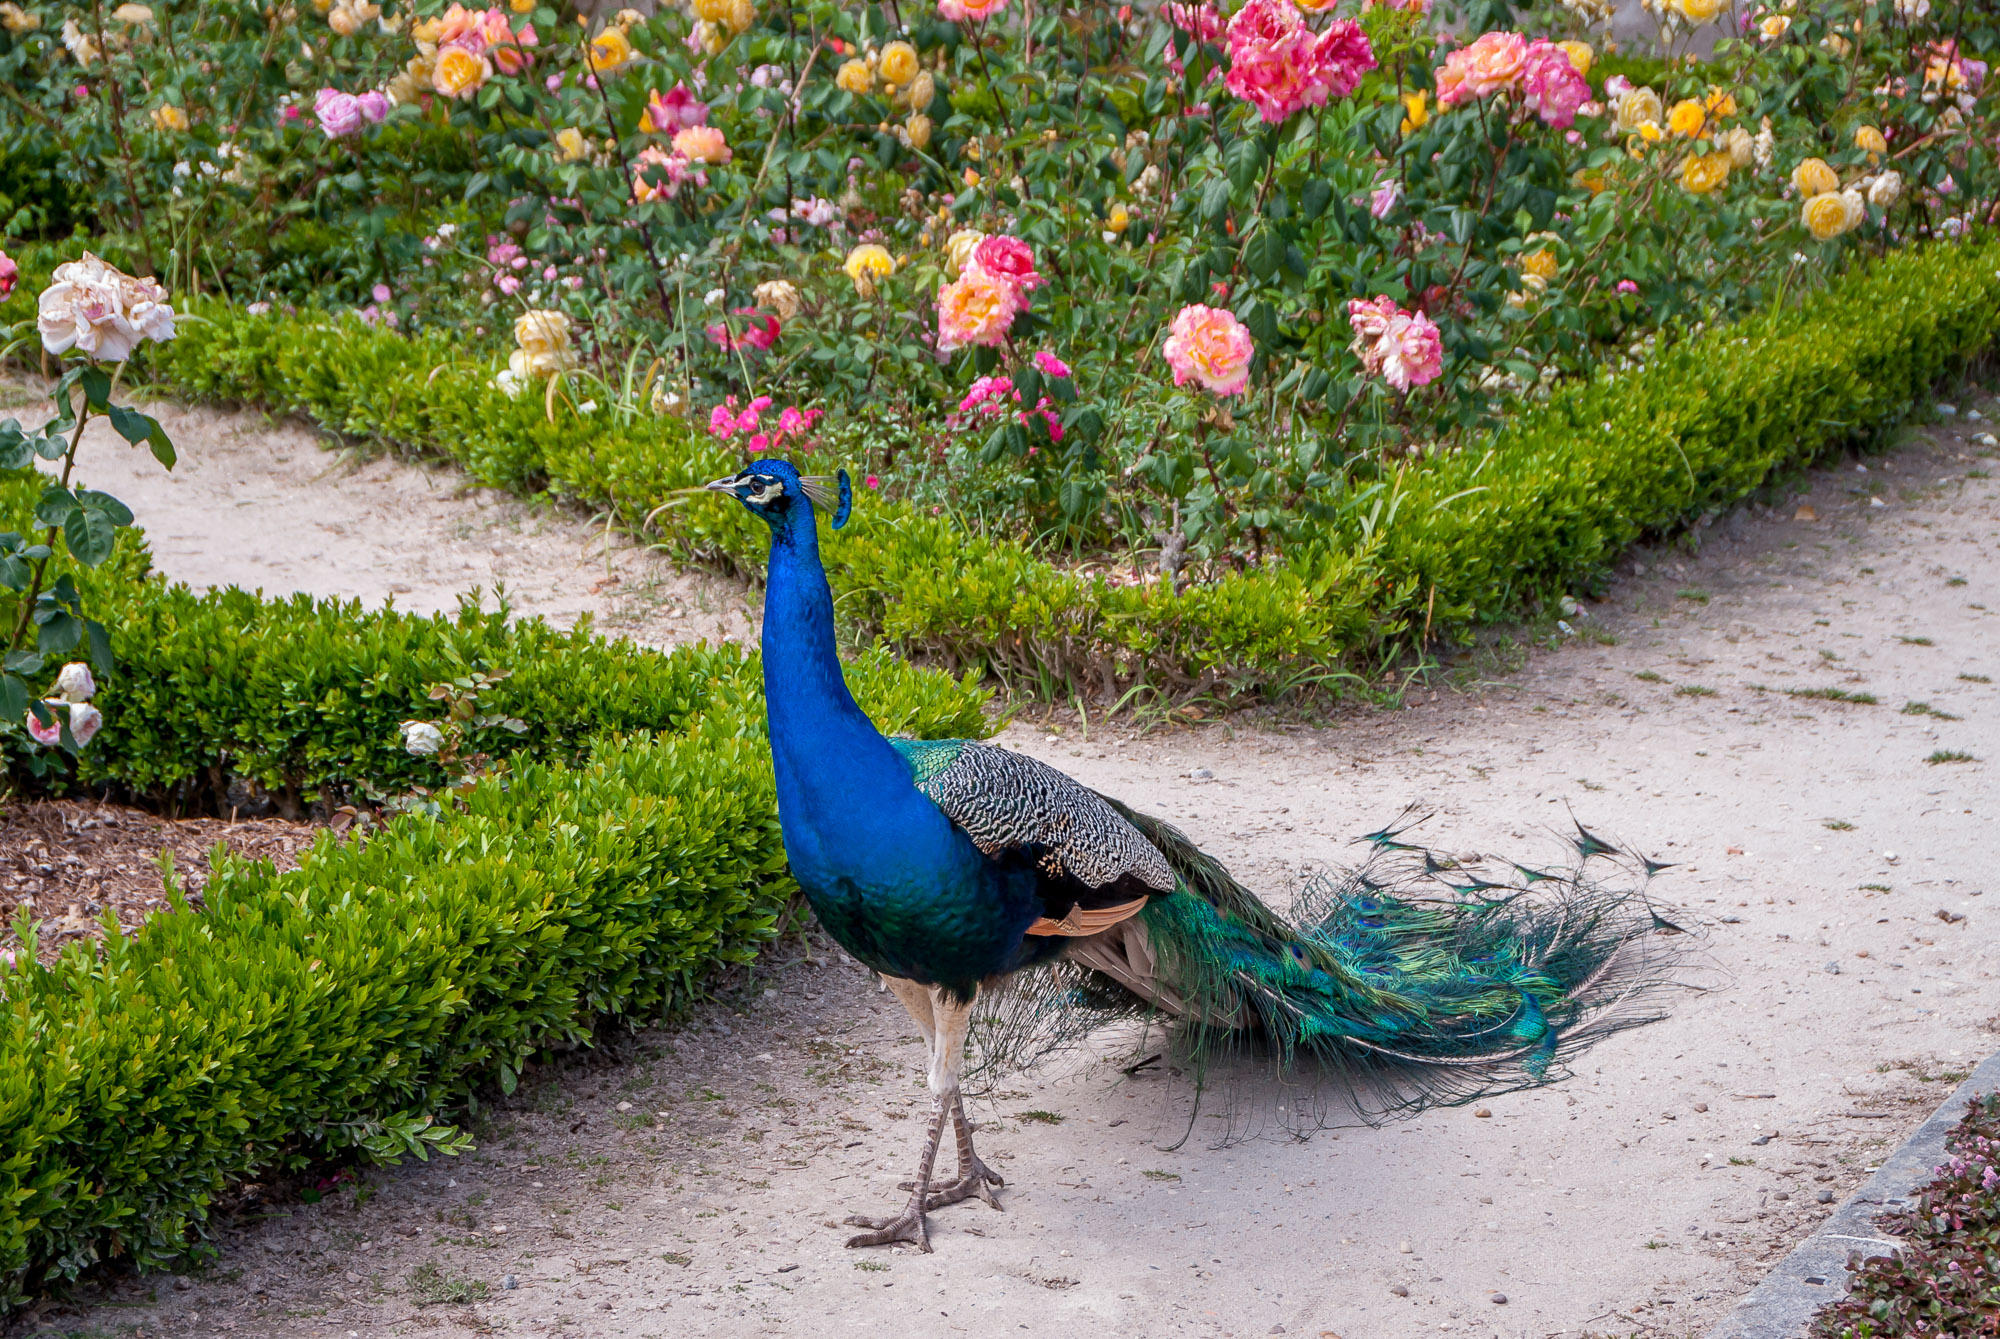 Porto peacock